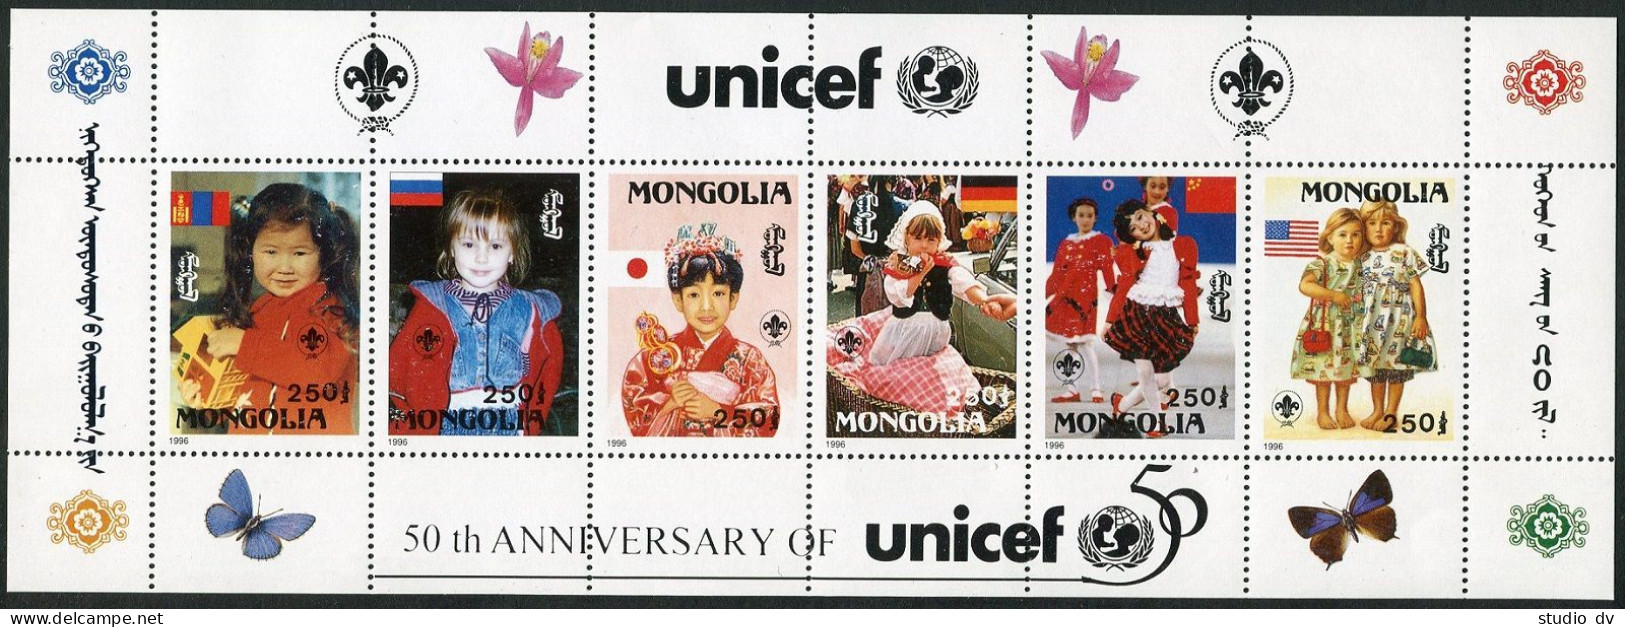 Mongolia 2247J-Oq Sheet,MNH. UNICEF 1996.Children,Scouting Emblem.Flags. - Mongolei